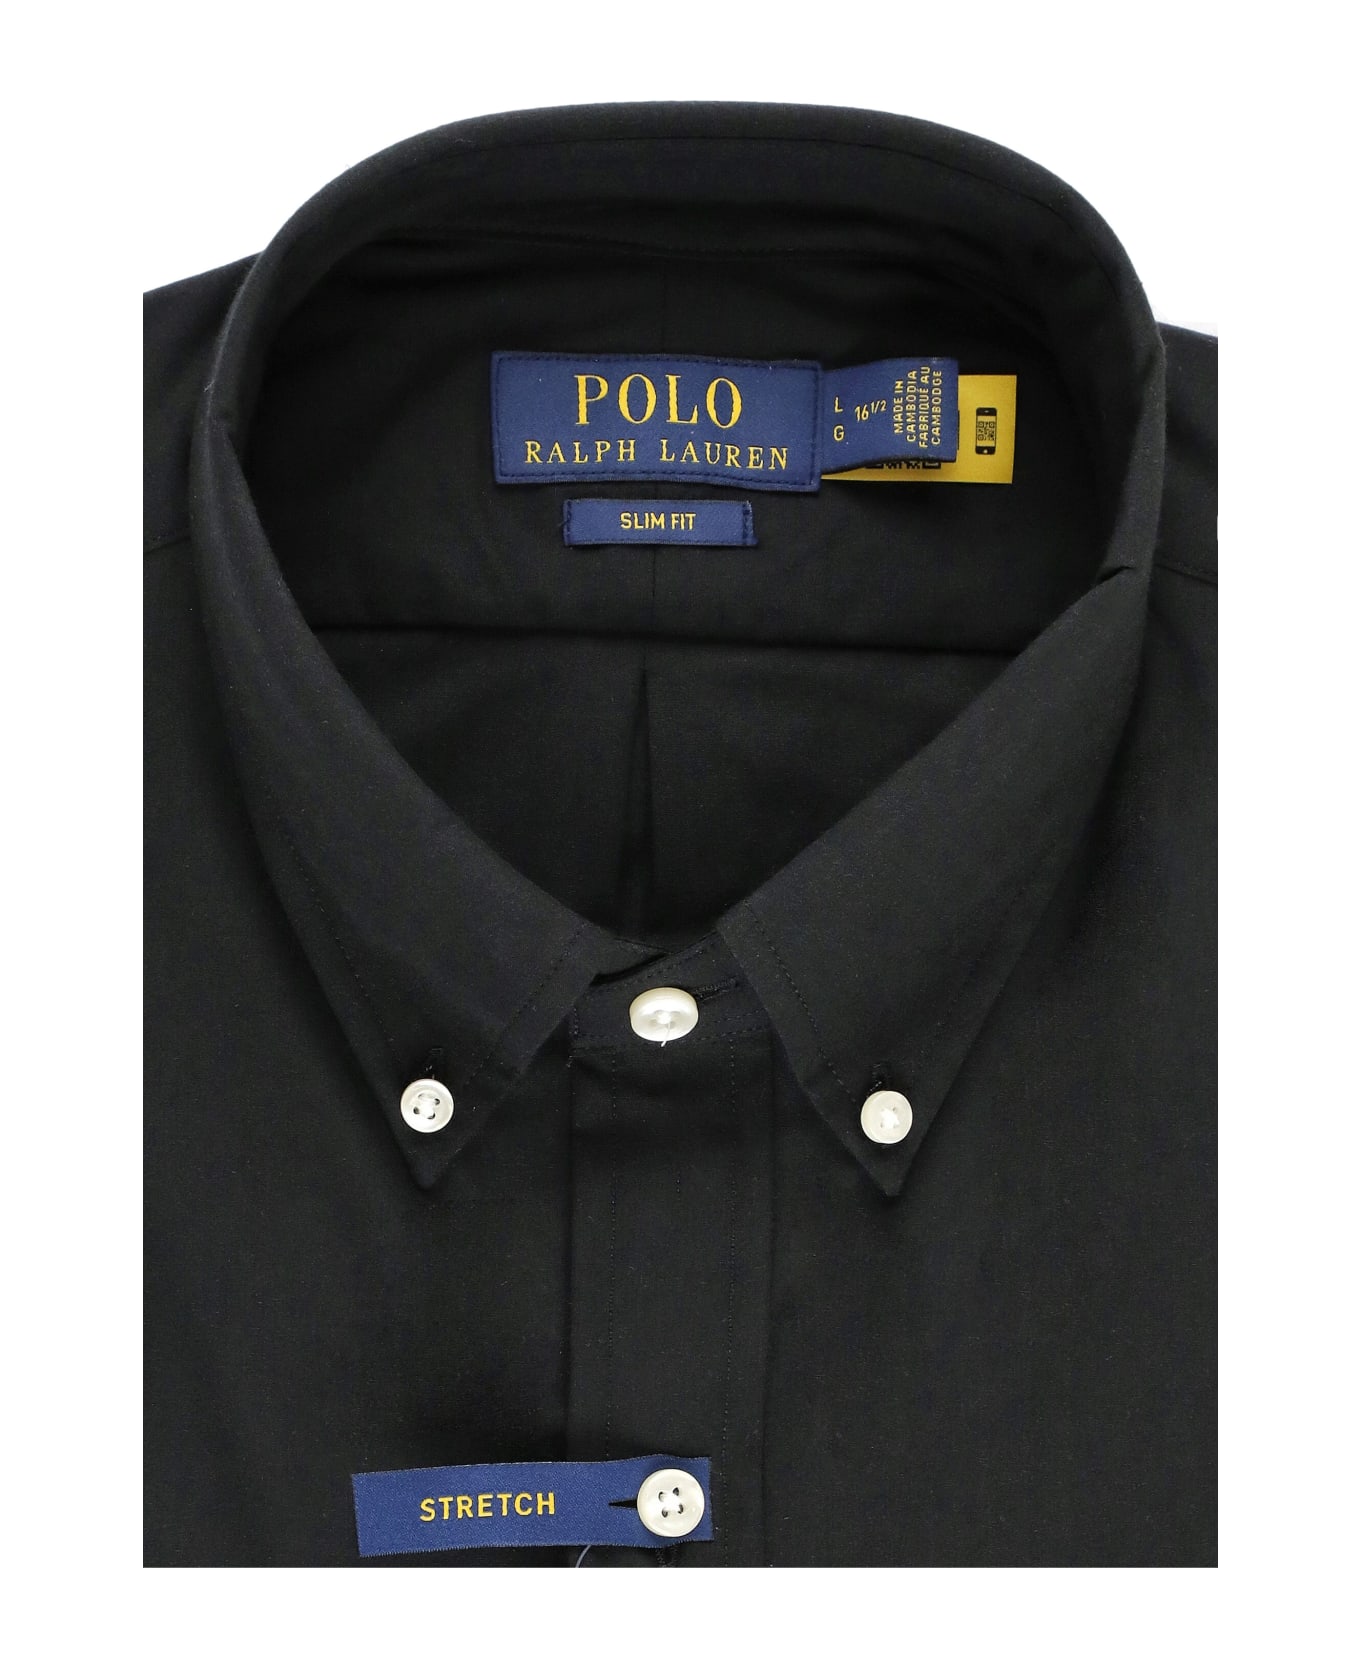 Polo Ralph Lauren Black Cotton Poplin Shirt With Logo - Black